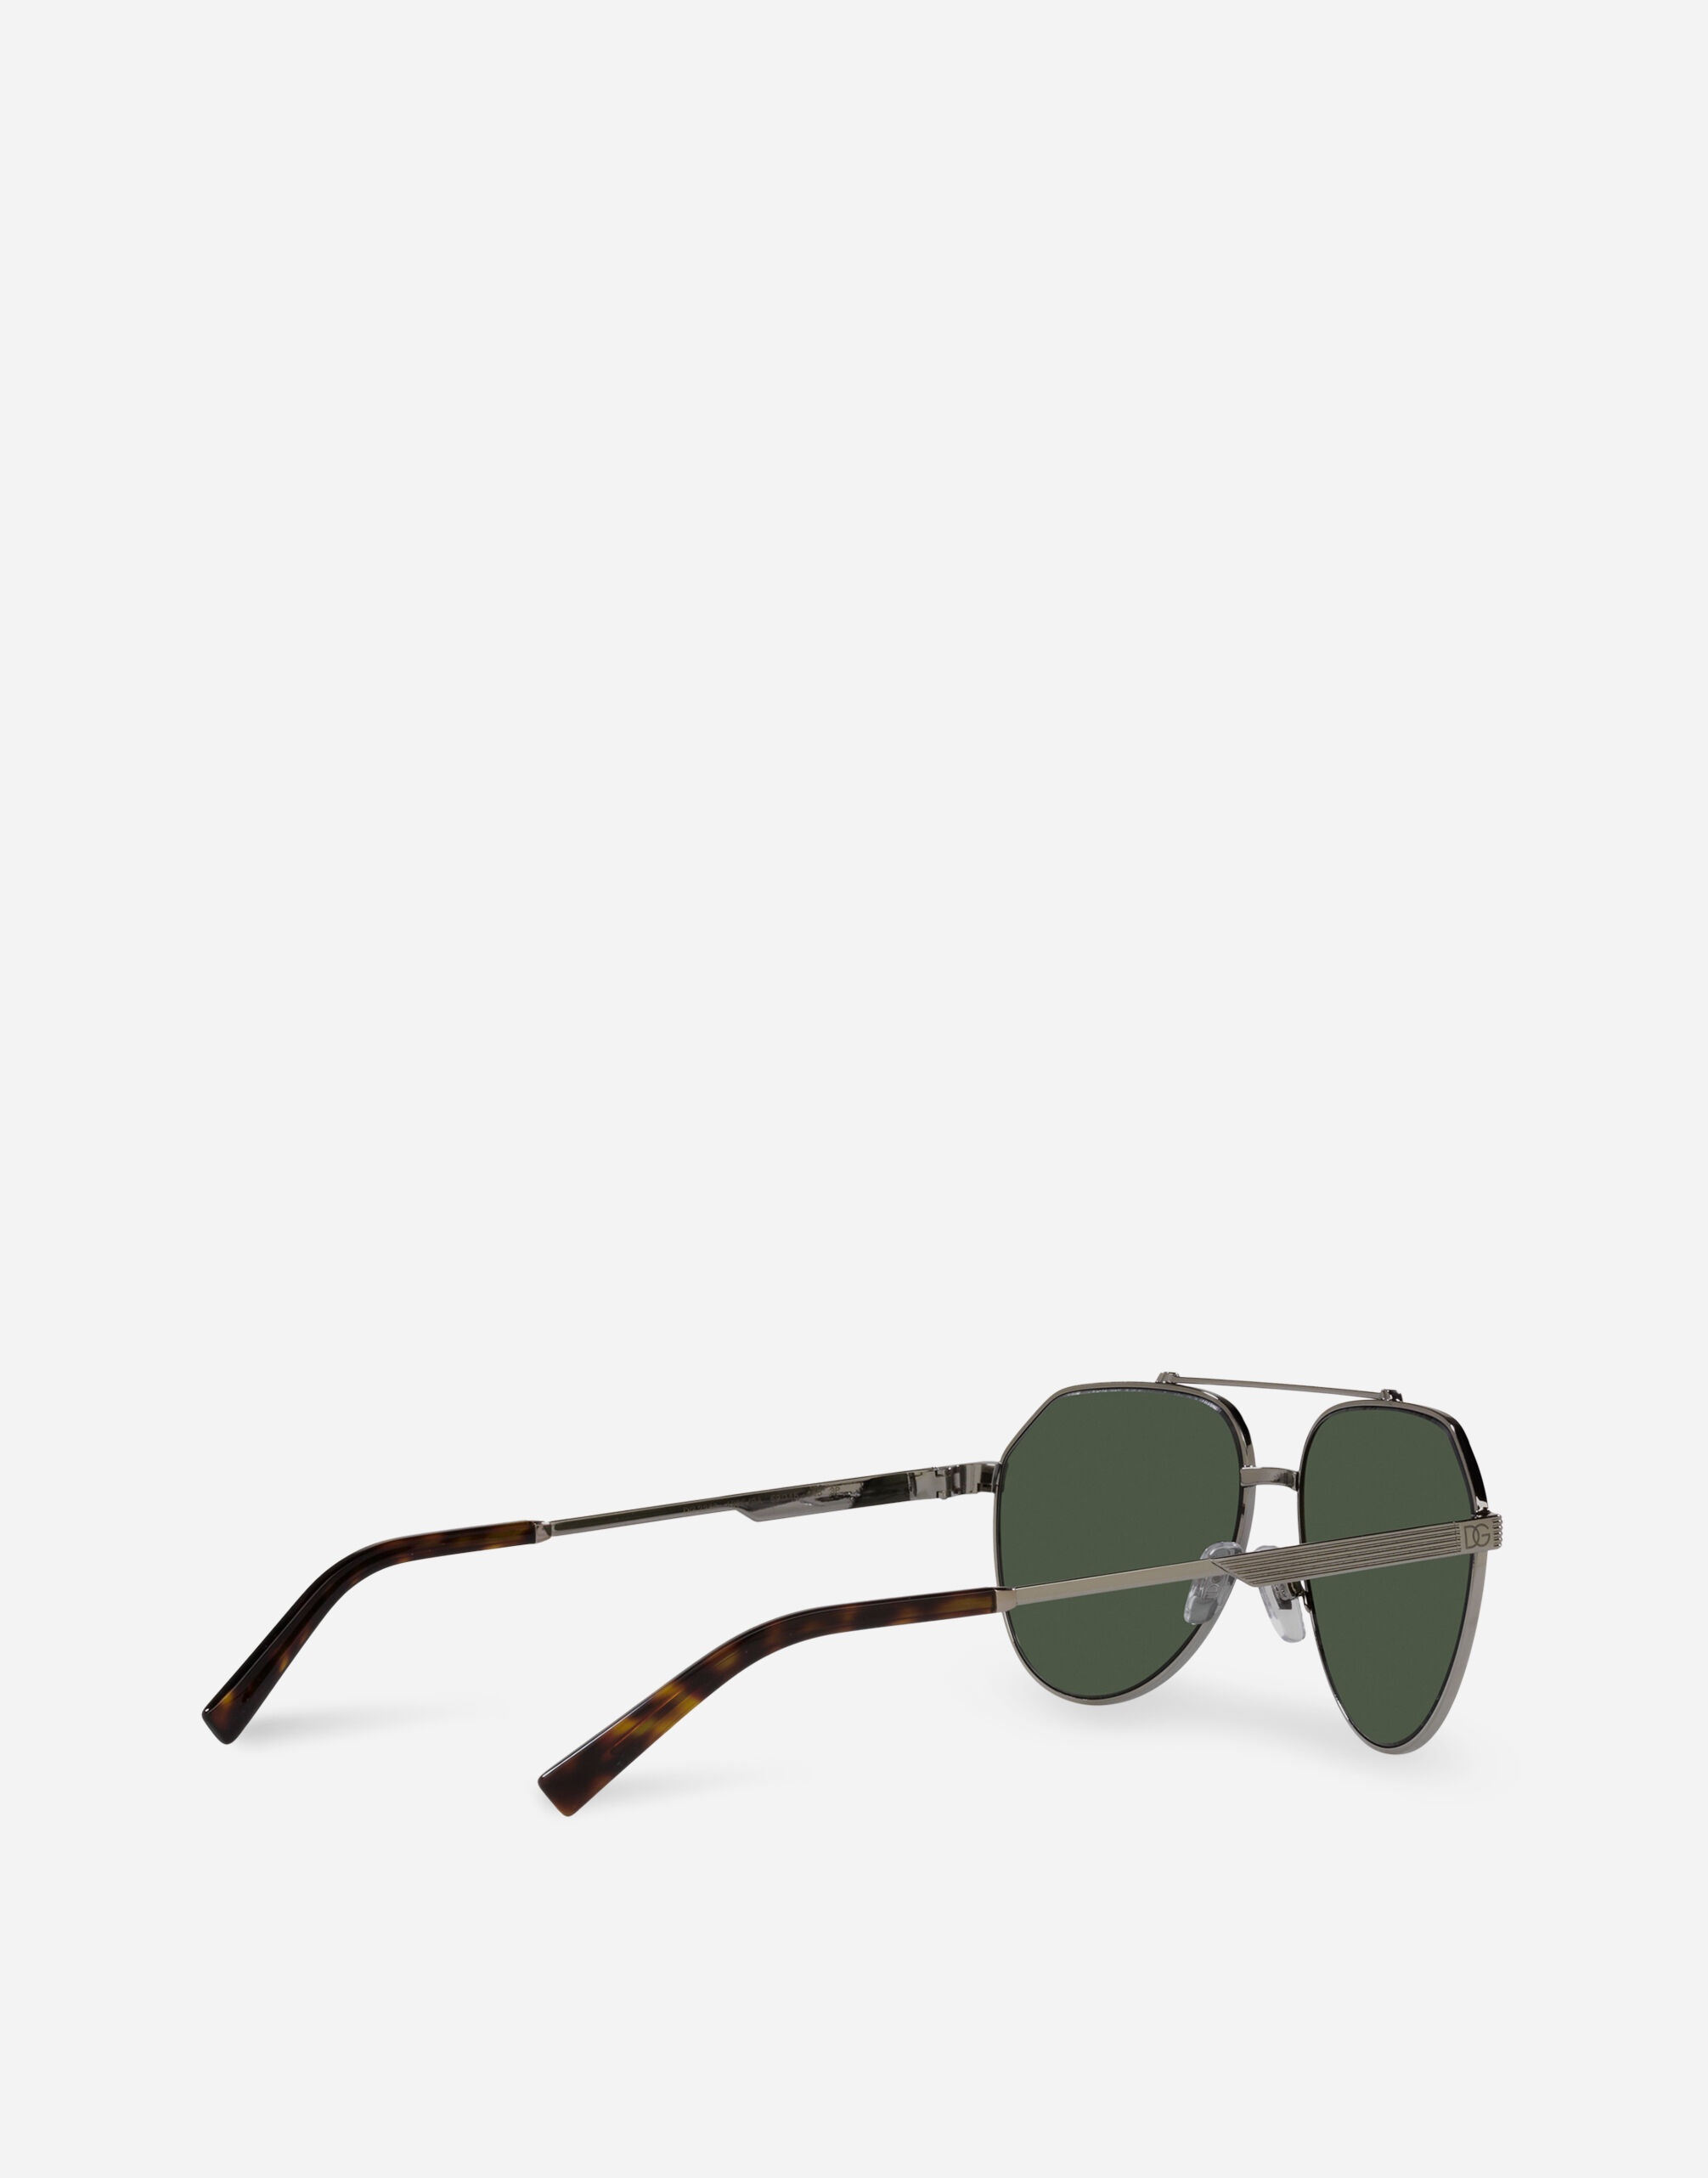 Gros grain sunglasses - 4